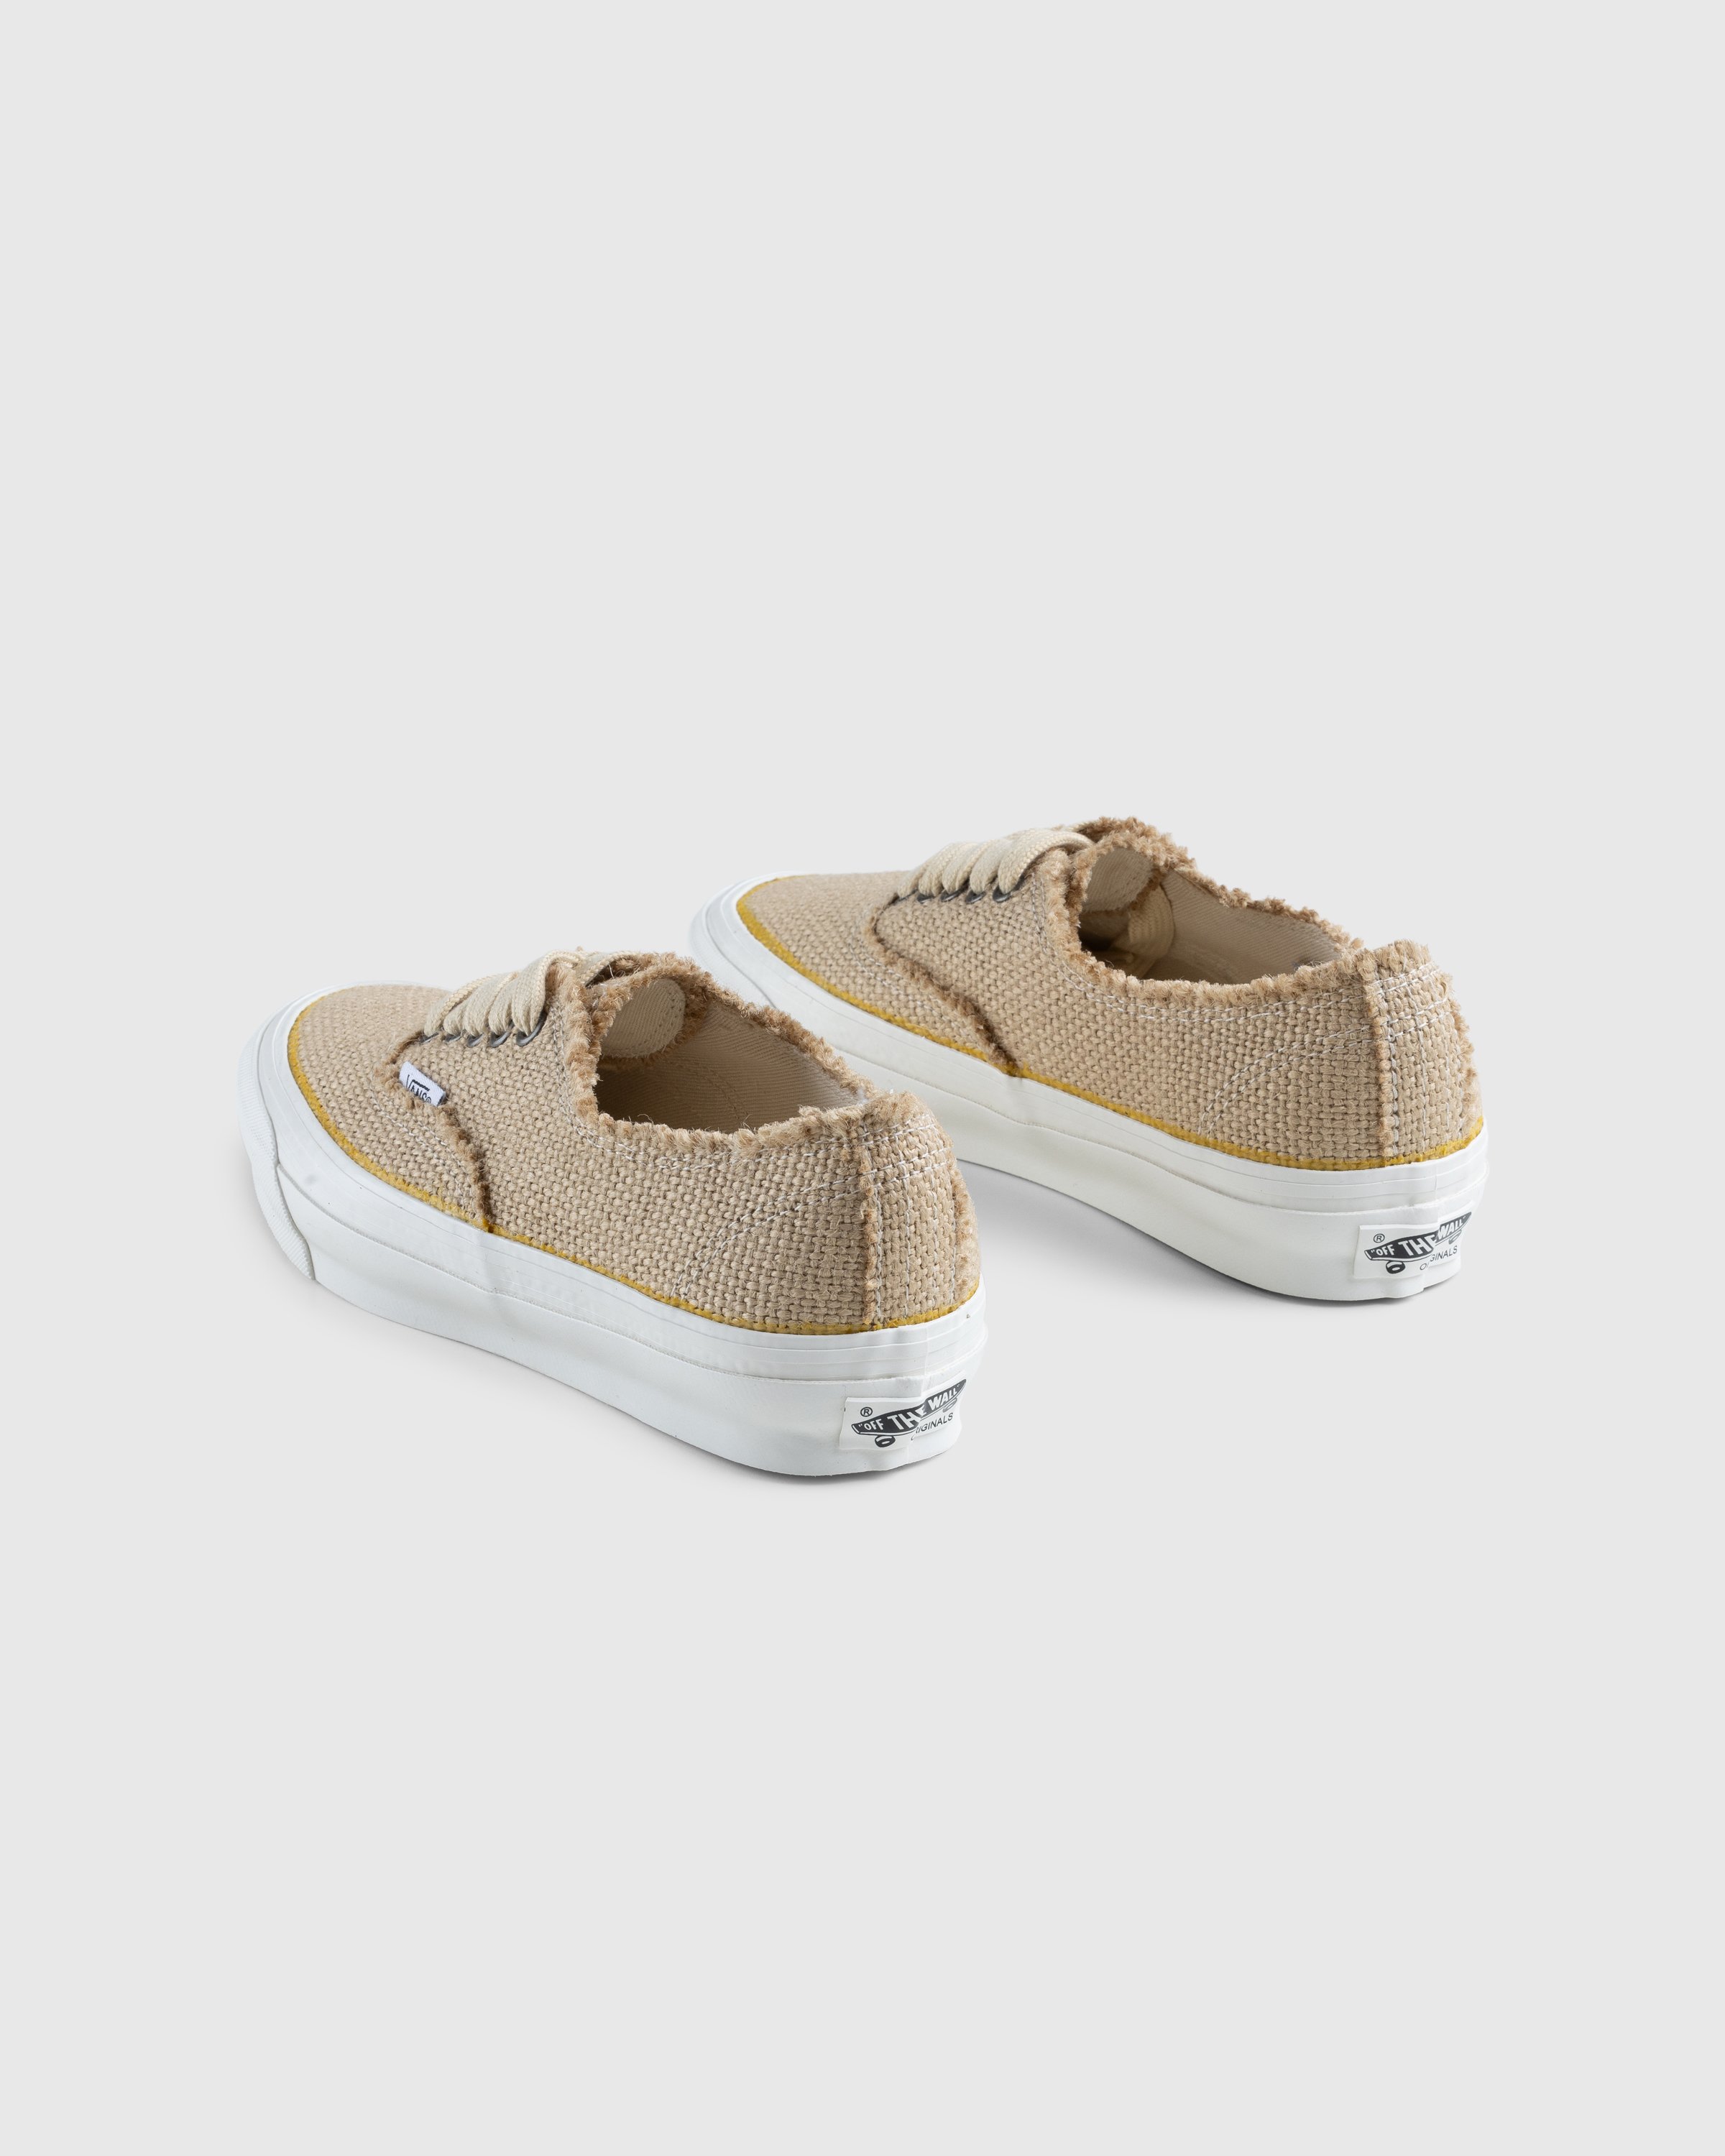 Vans - OG Authentic LX Frayed Starfish - Footwear - Beige - Image 4